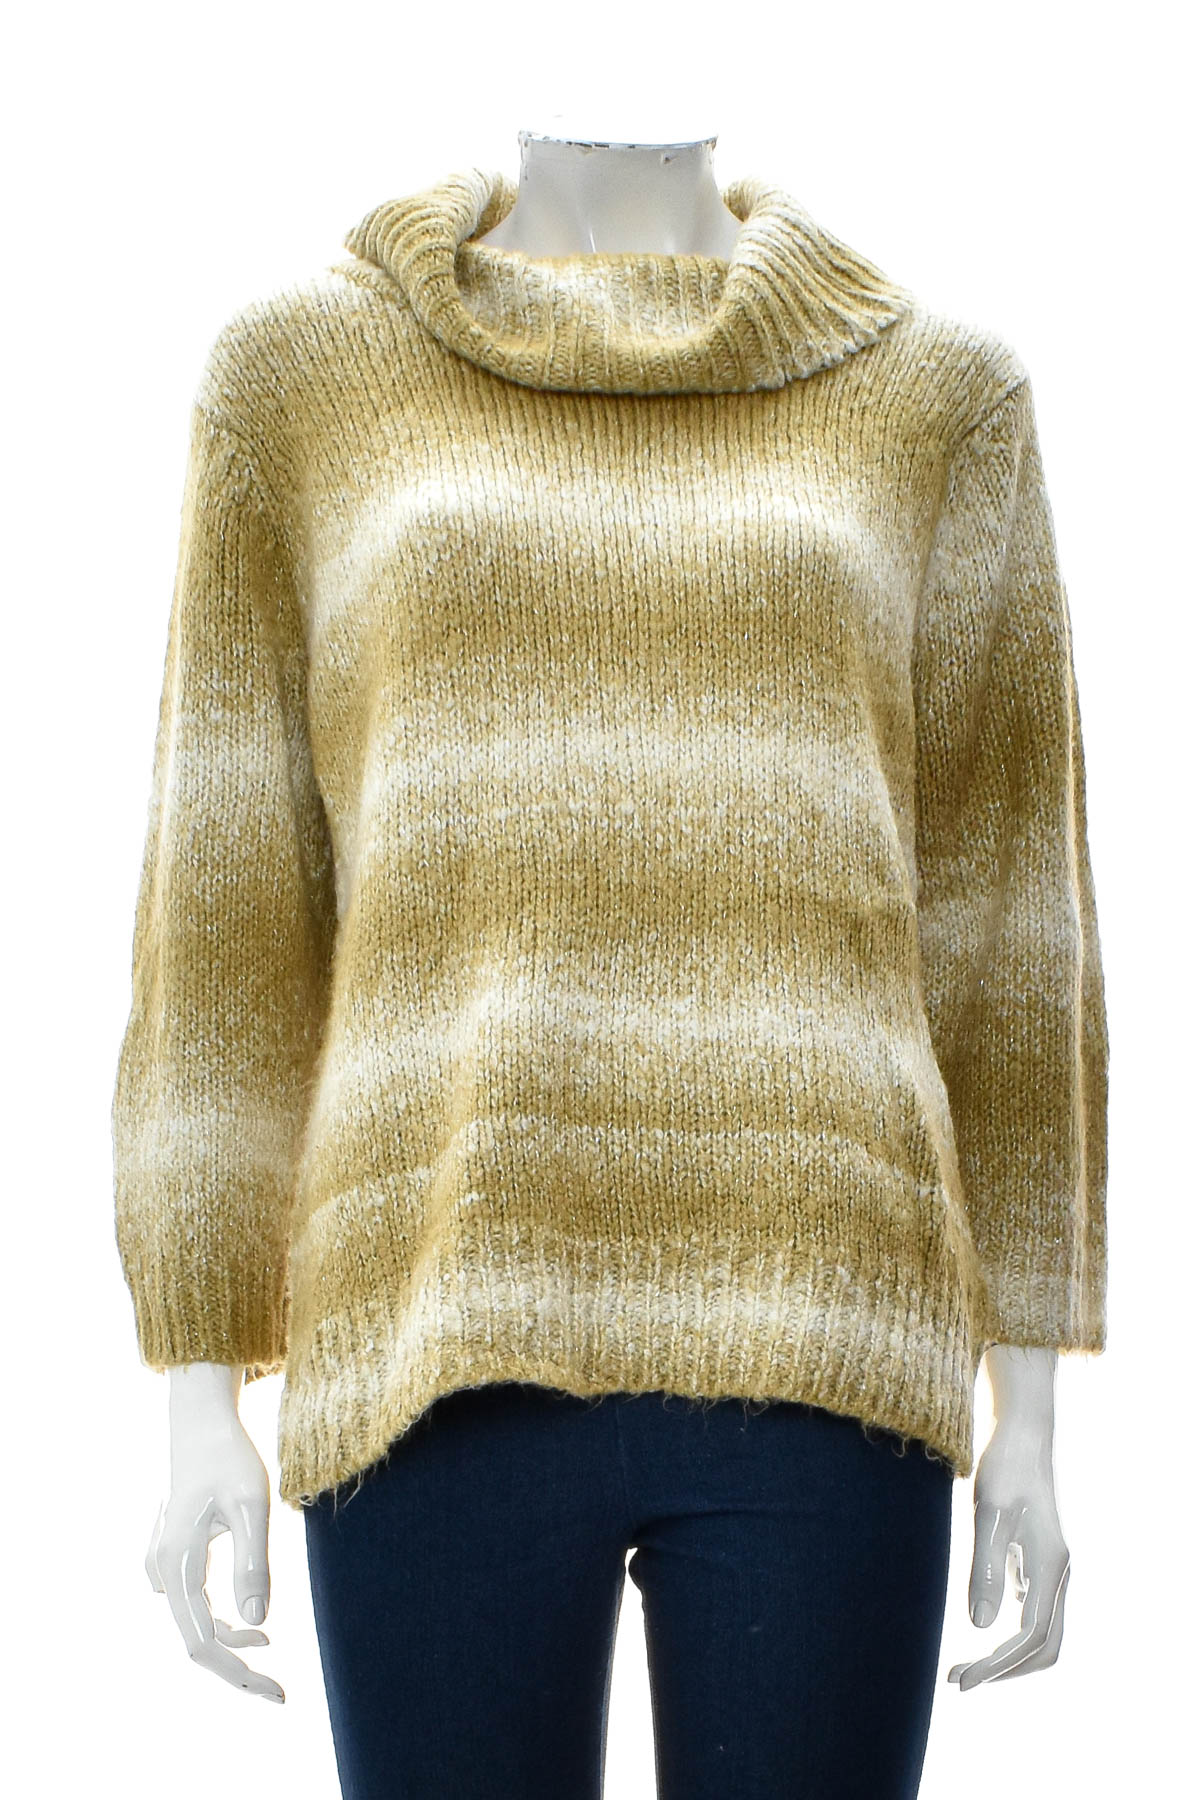 Women's sweater - SAG HARBOR - 0